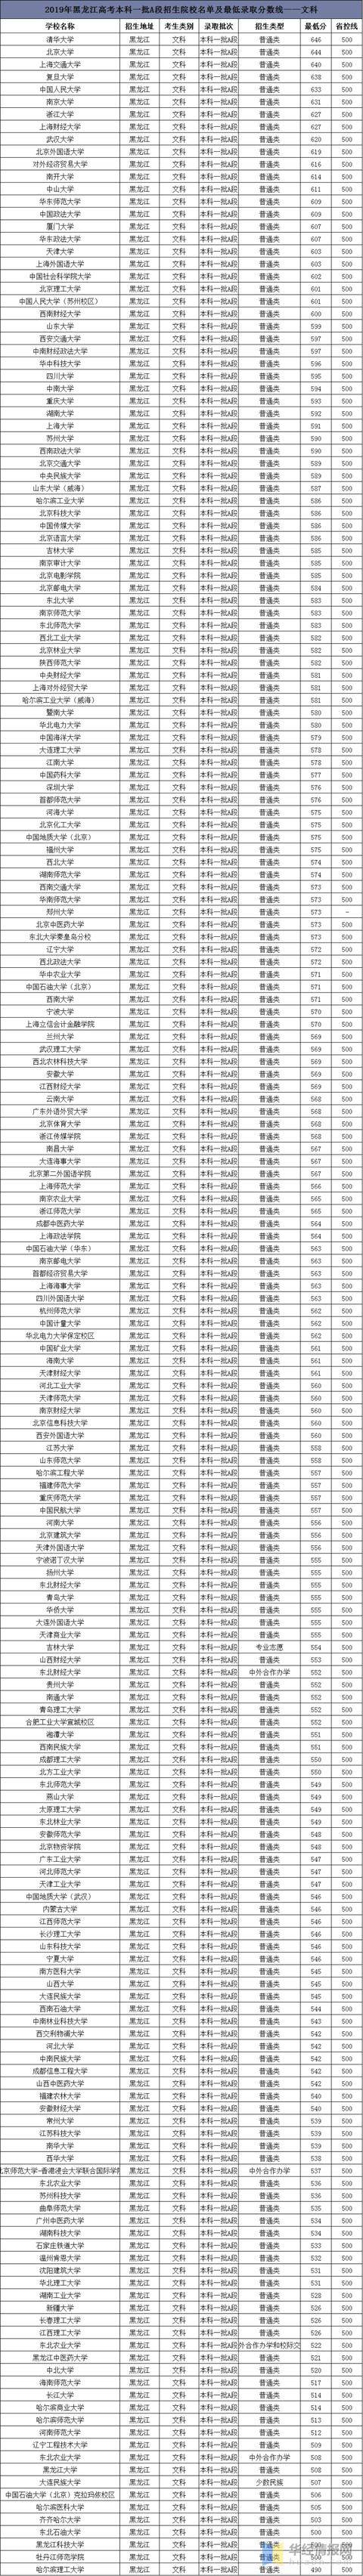 bet356体育在线亚洲最新最|
2019年黑龙江本科一批招生院校及最低录取分数线排名表（文科）(图1)